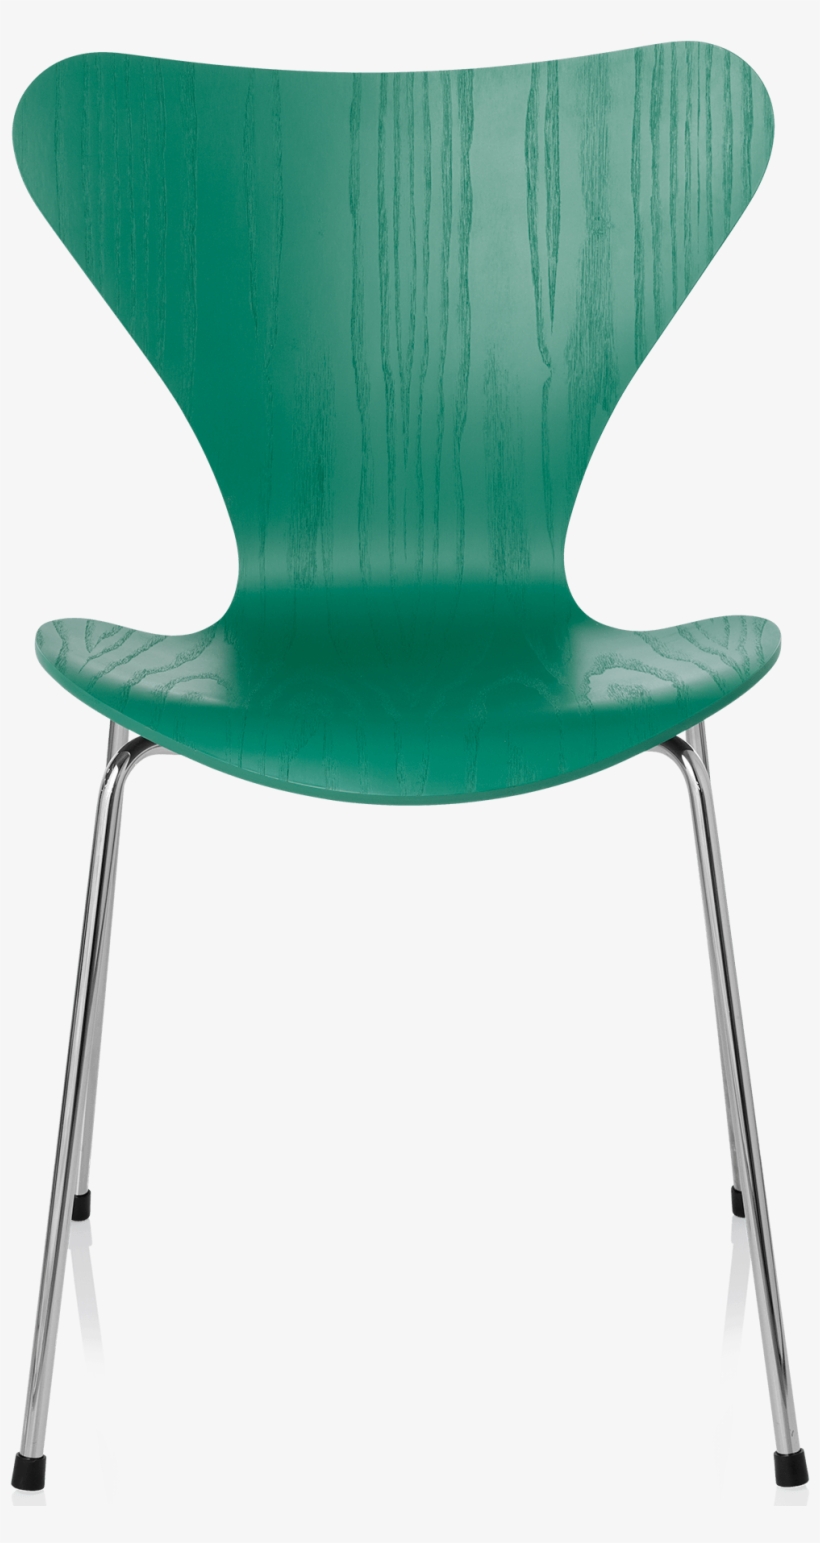 Series 7 Chair Arne Jacobsen Huzun Green Coloured Ash - 7 Chair, transparent png #234331